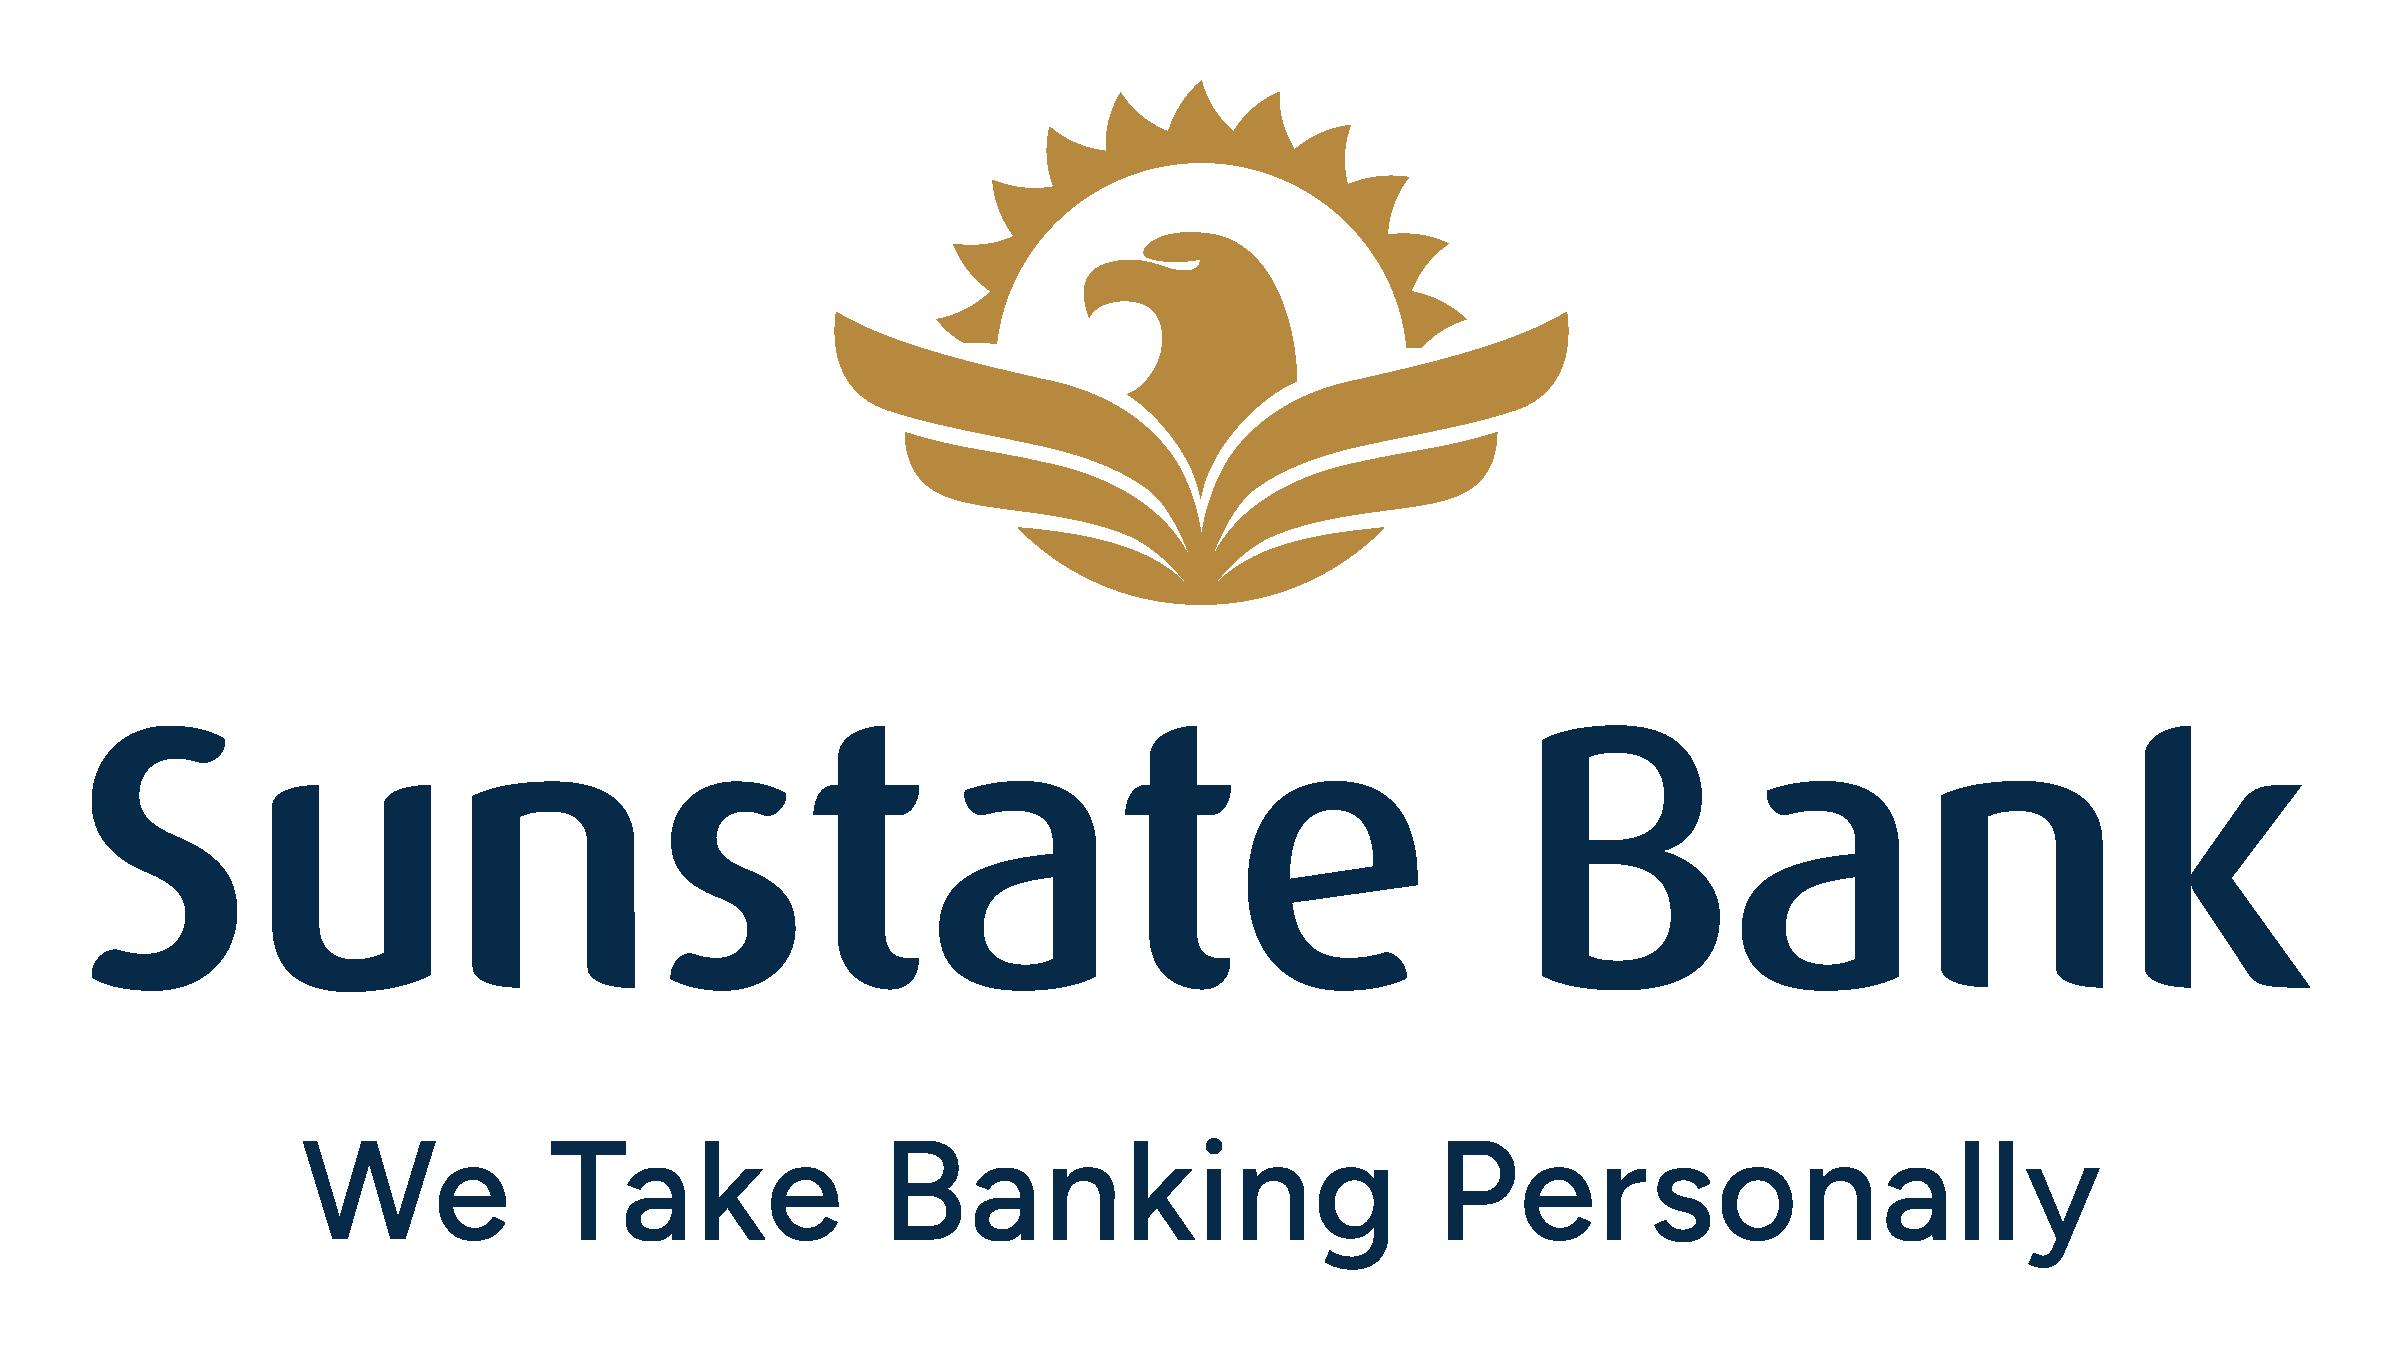 Sunstate Bank